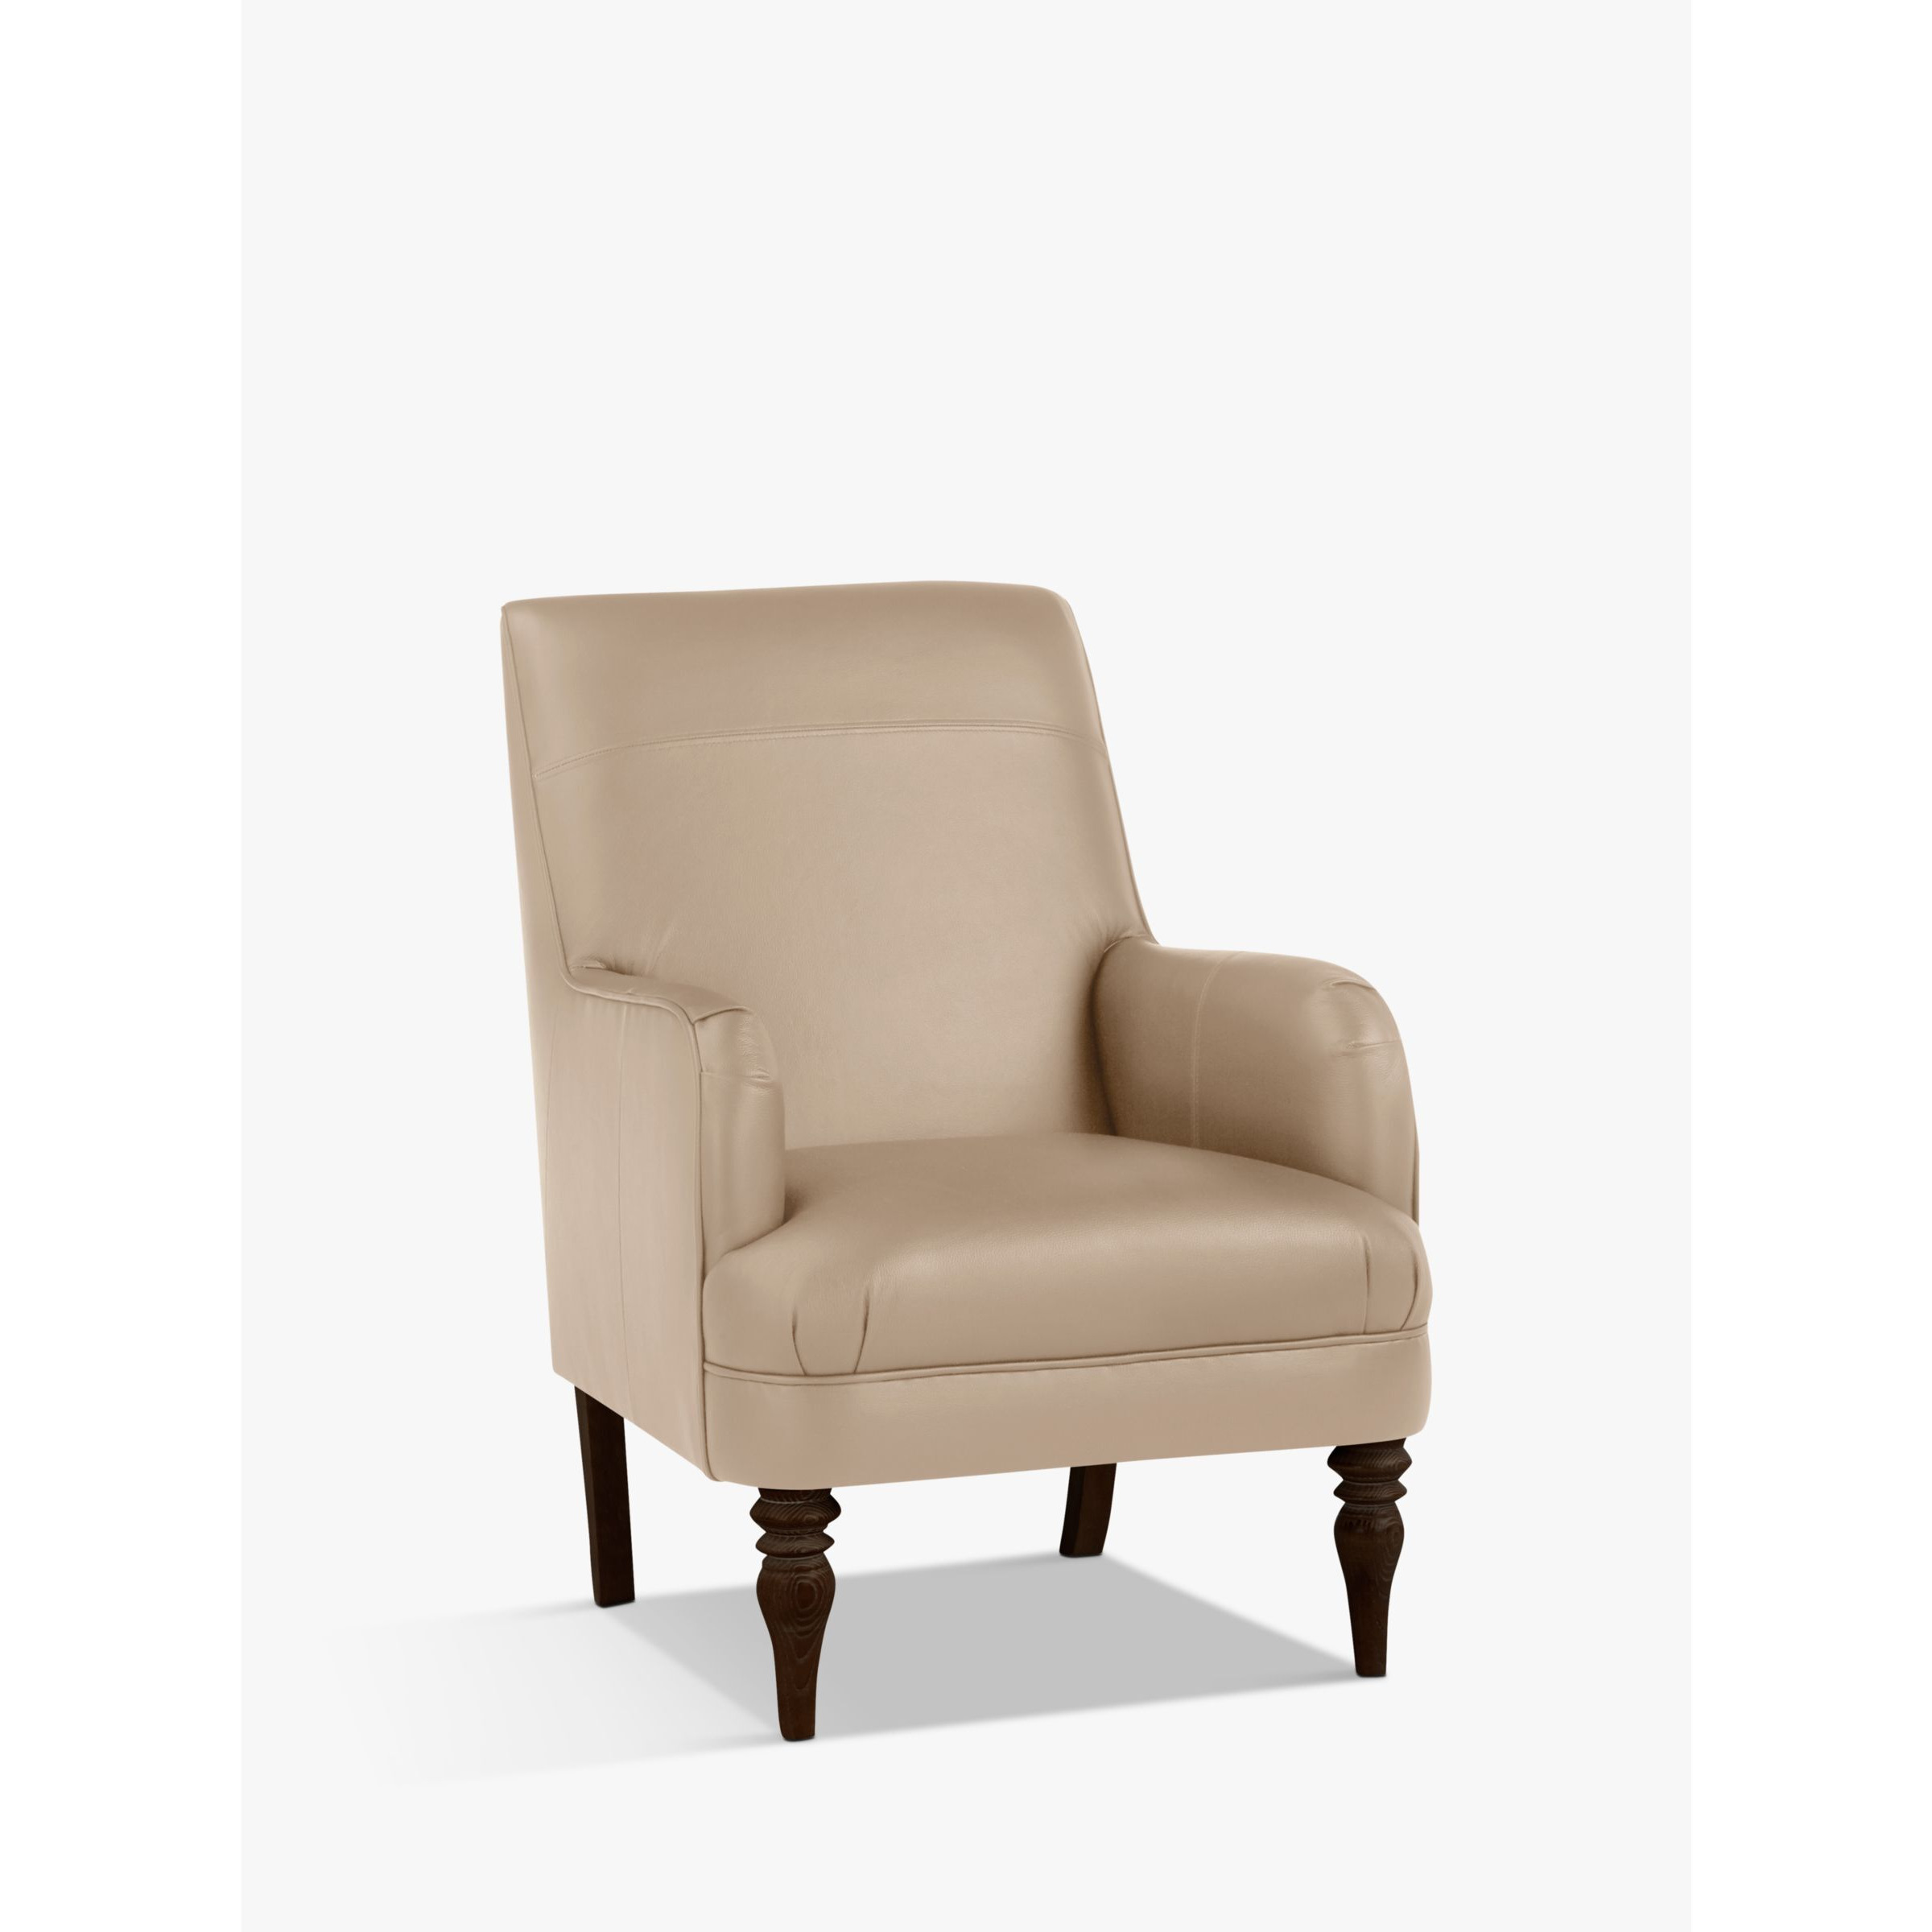 John Lewis Sterling Leather Armchair, Dark Leg - image 1